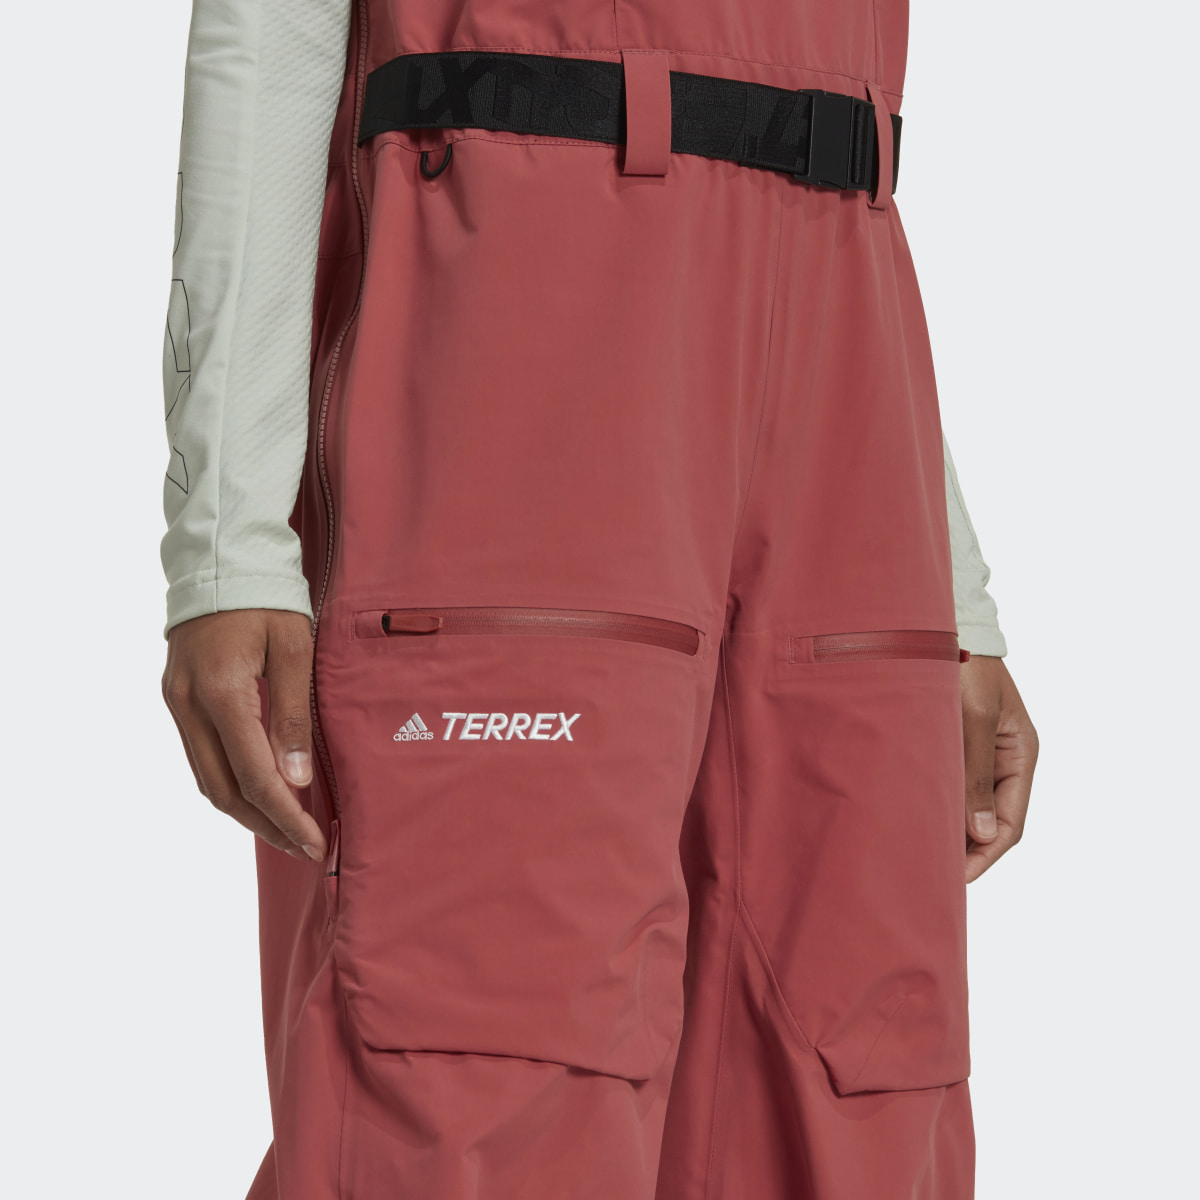 Adidas TERREX 3Layer GORE-TEX SNOW PANTS. 6